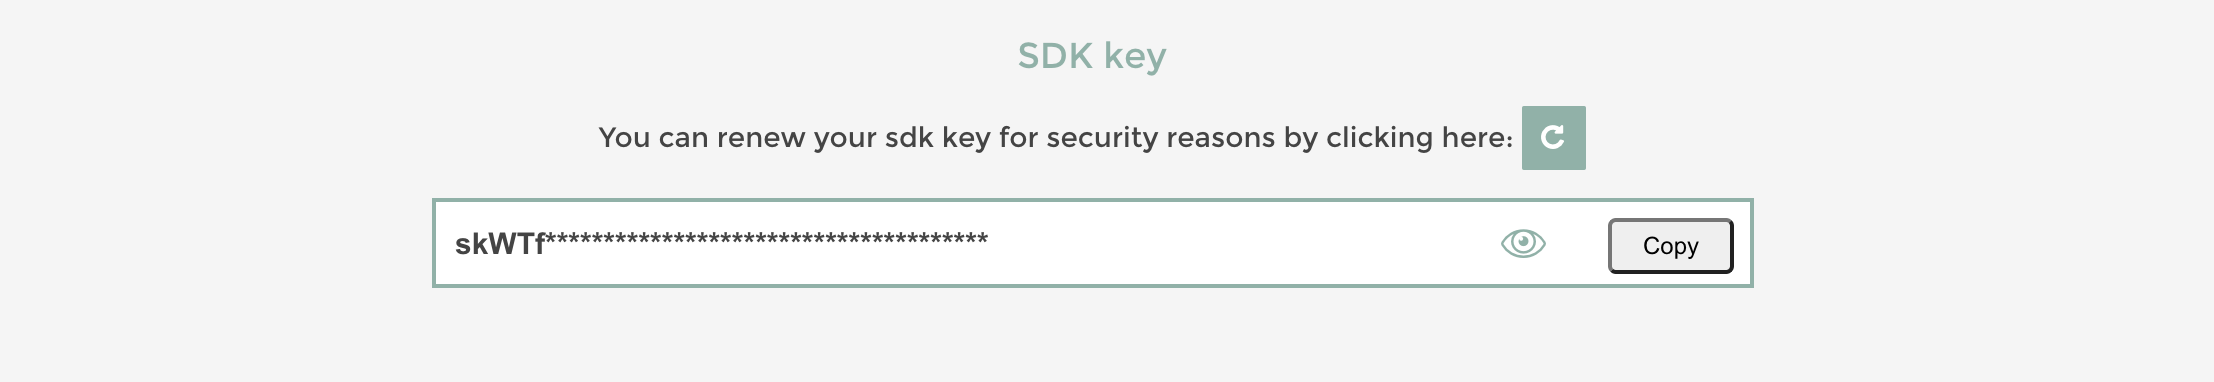 SDK Key